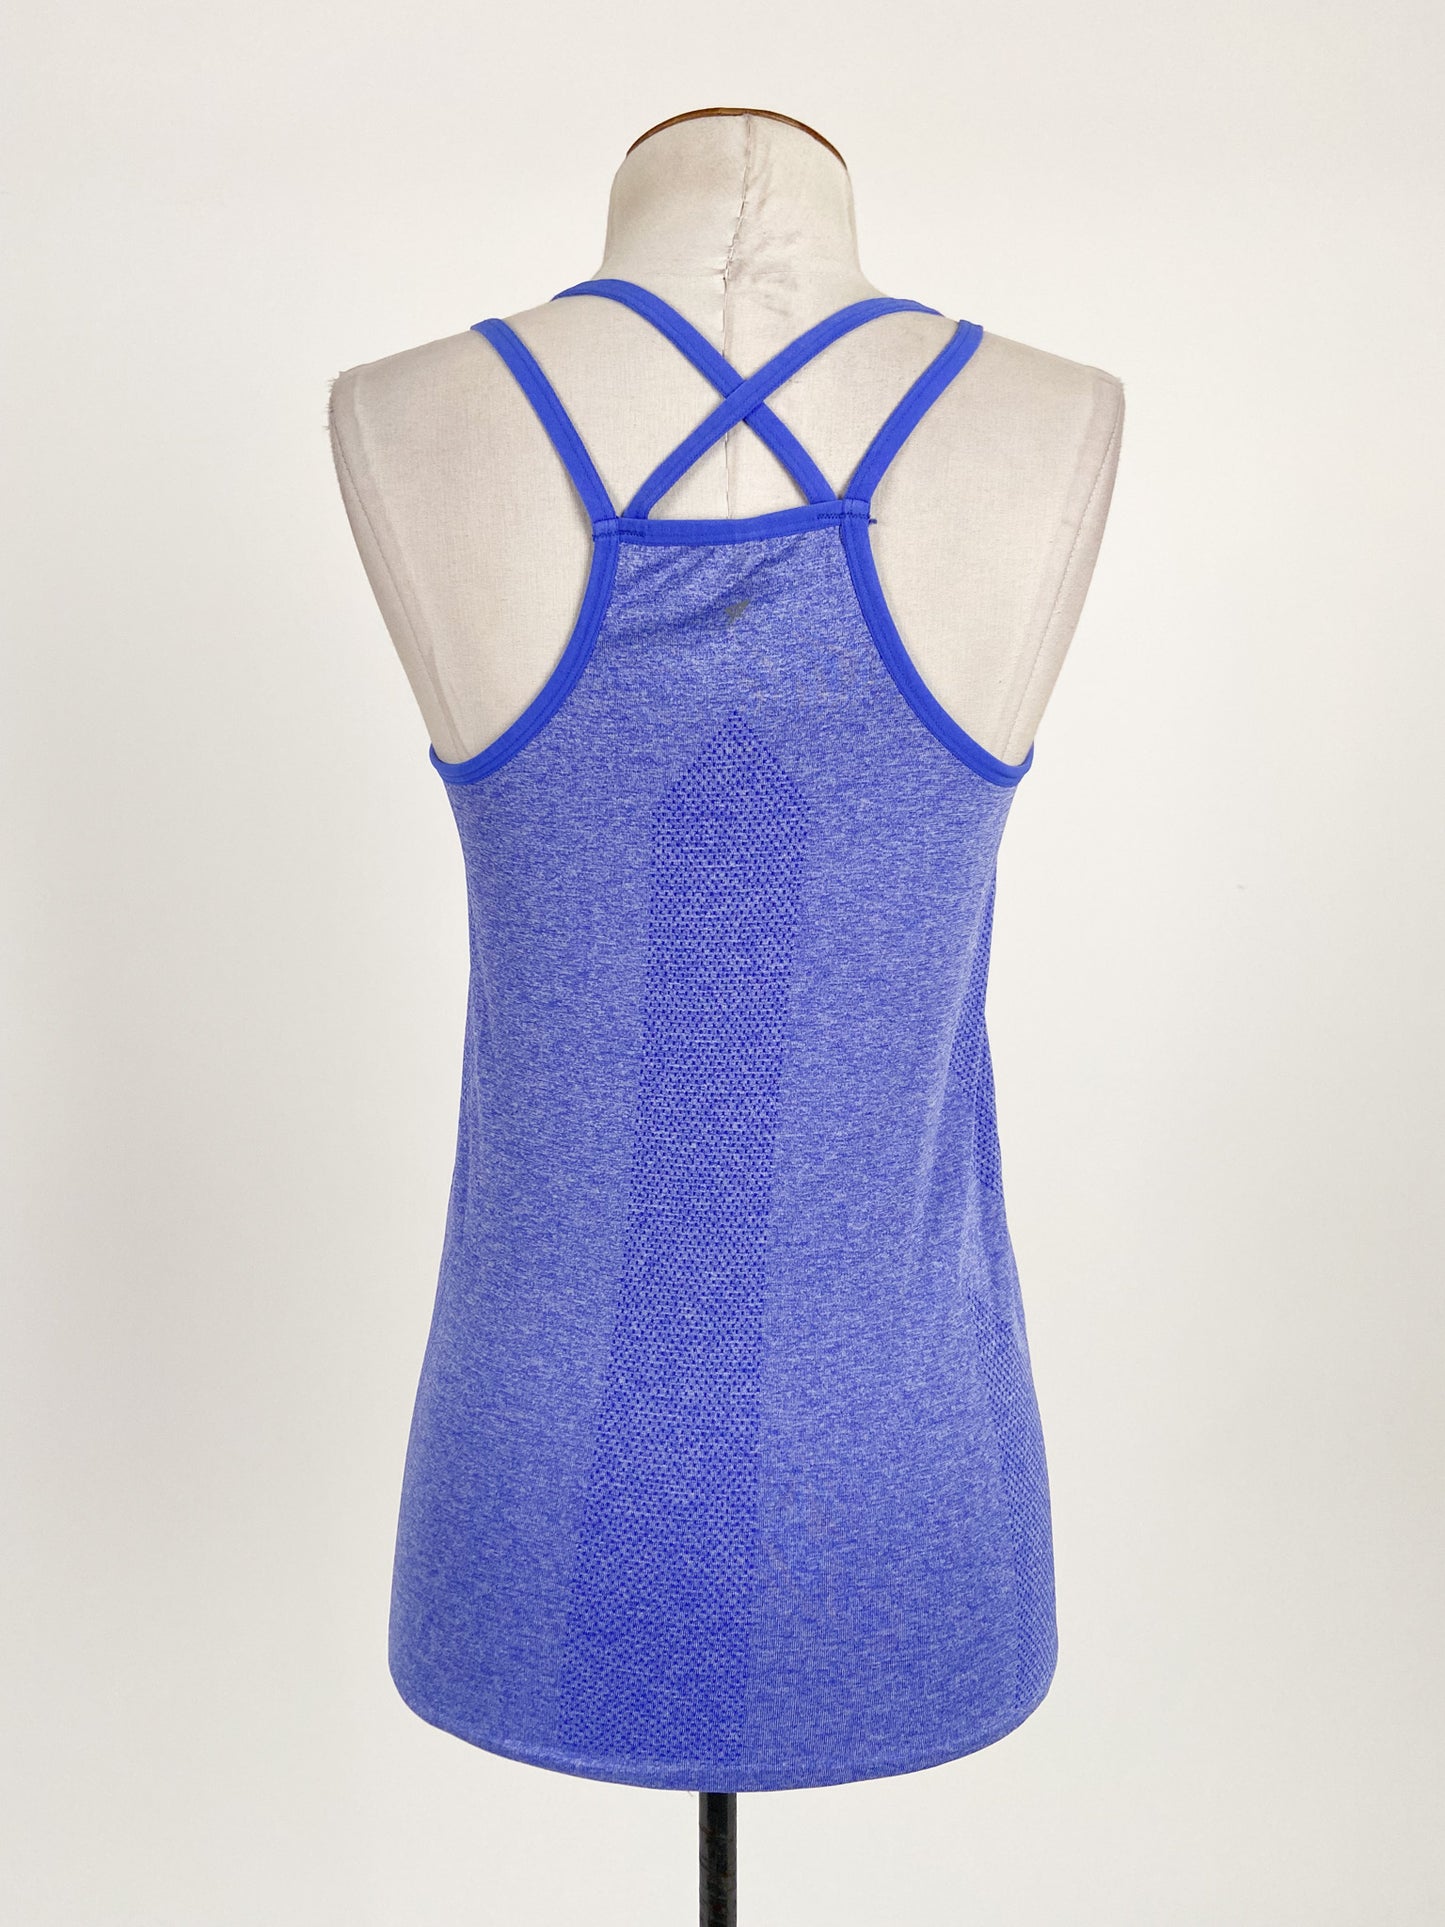 Primark | Blue Casual Activewear Top | Size 10